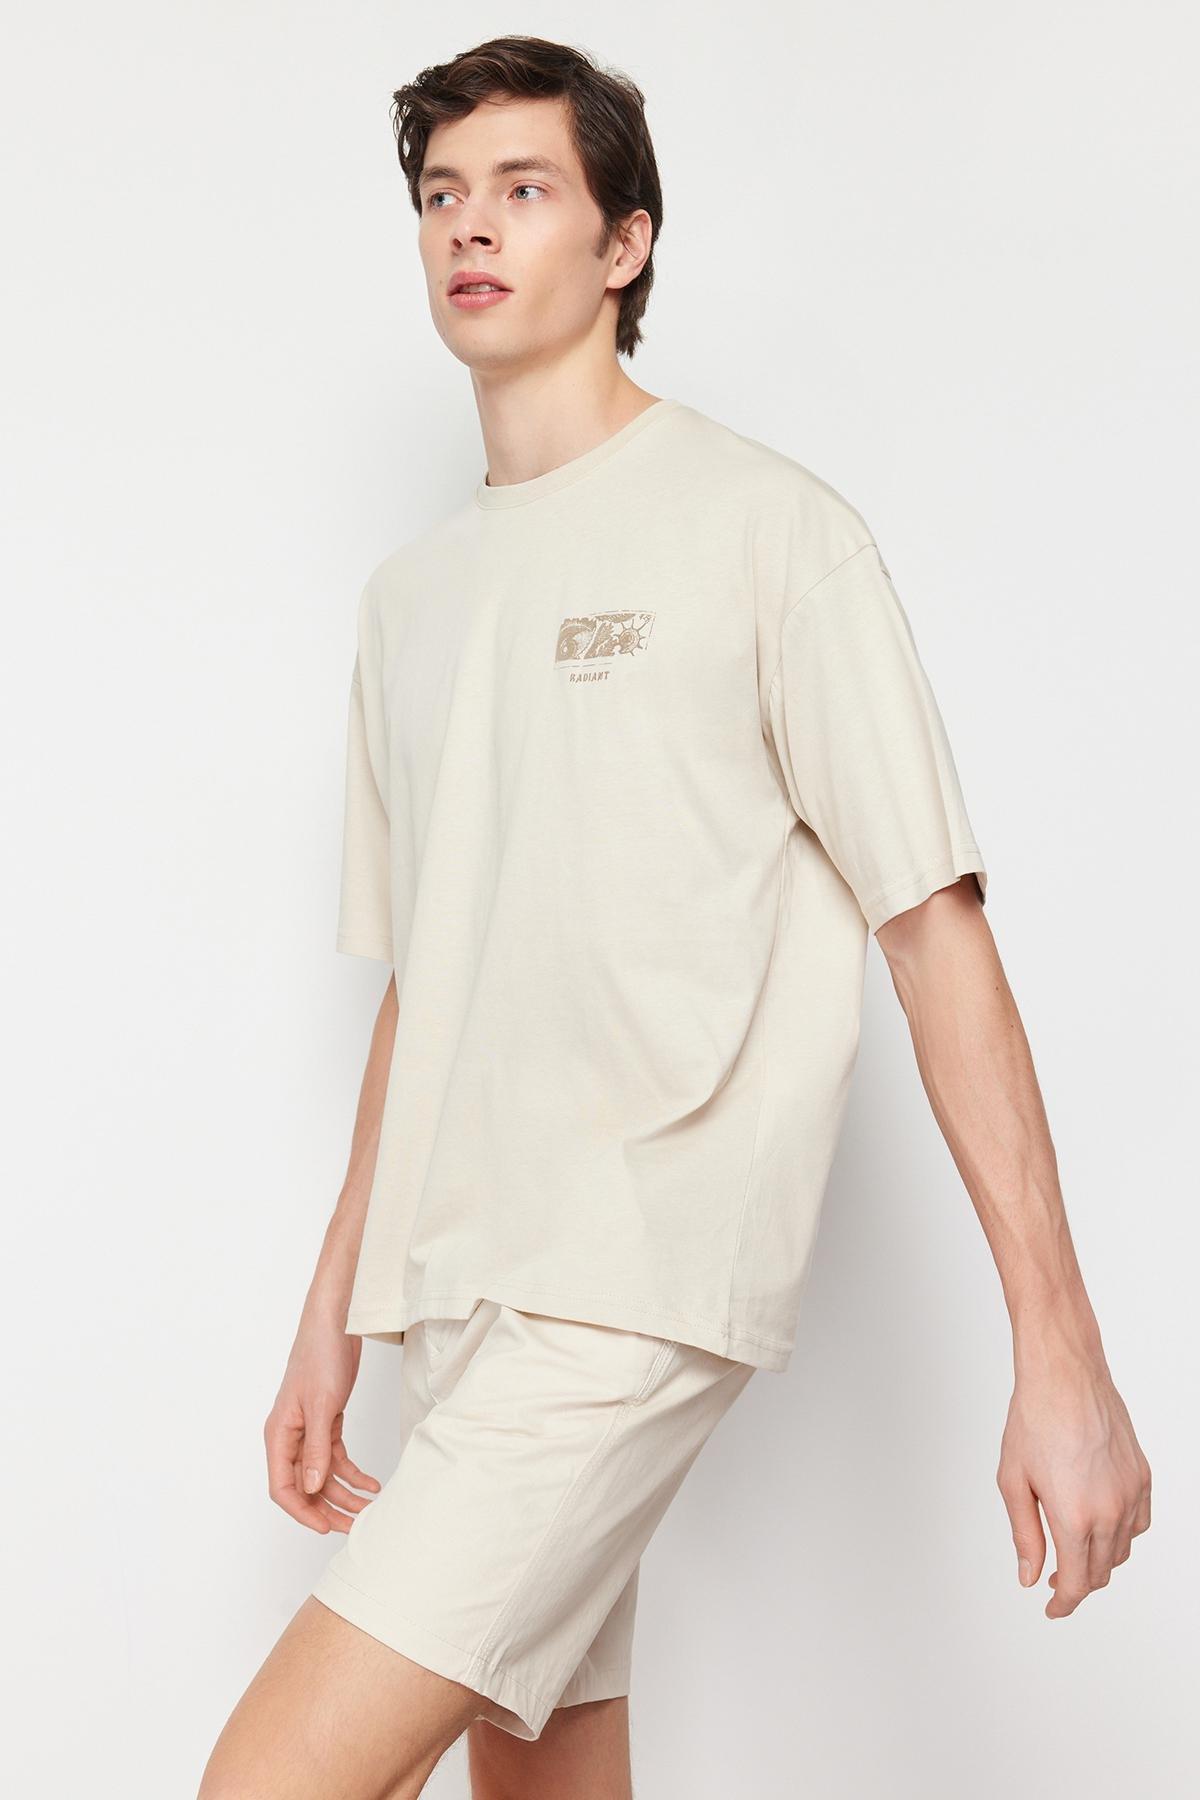 Trendyol - Beige Oversized Printed T-Shirt, Unisex